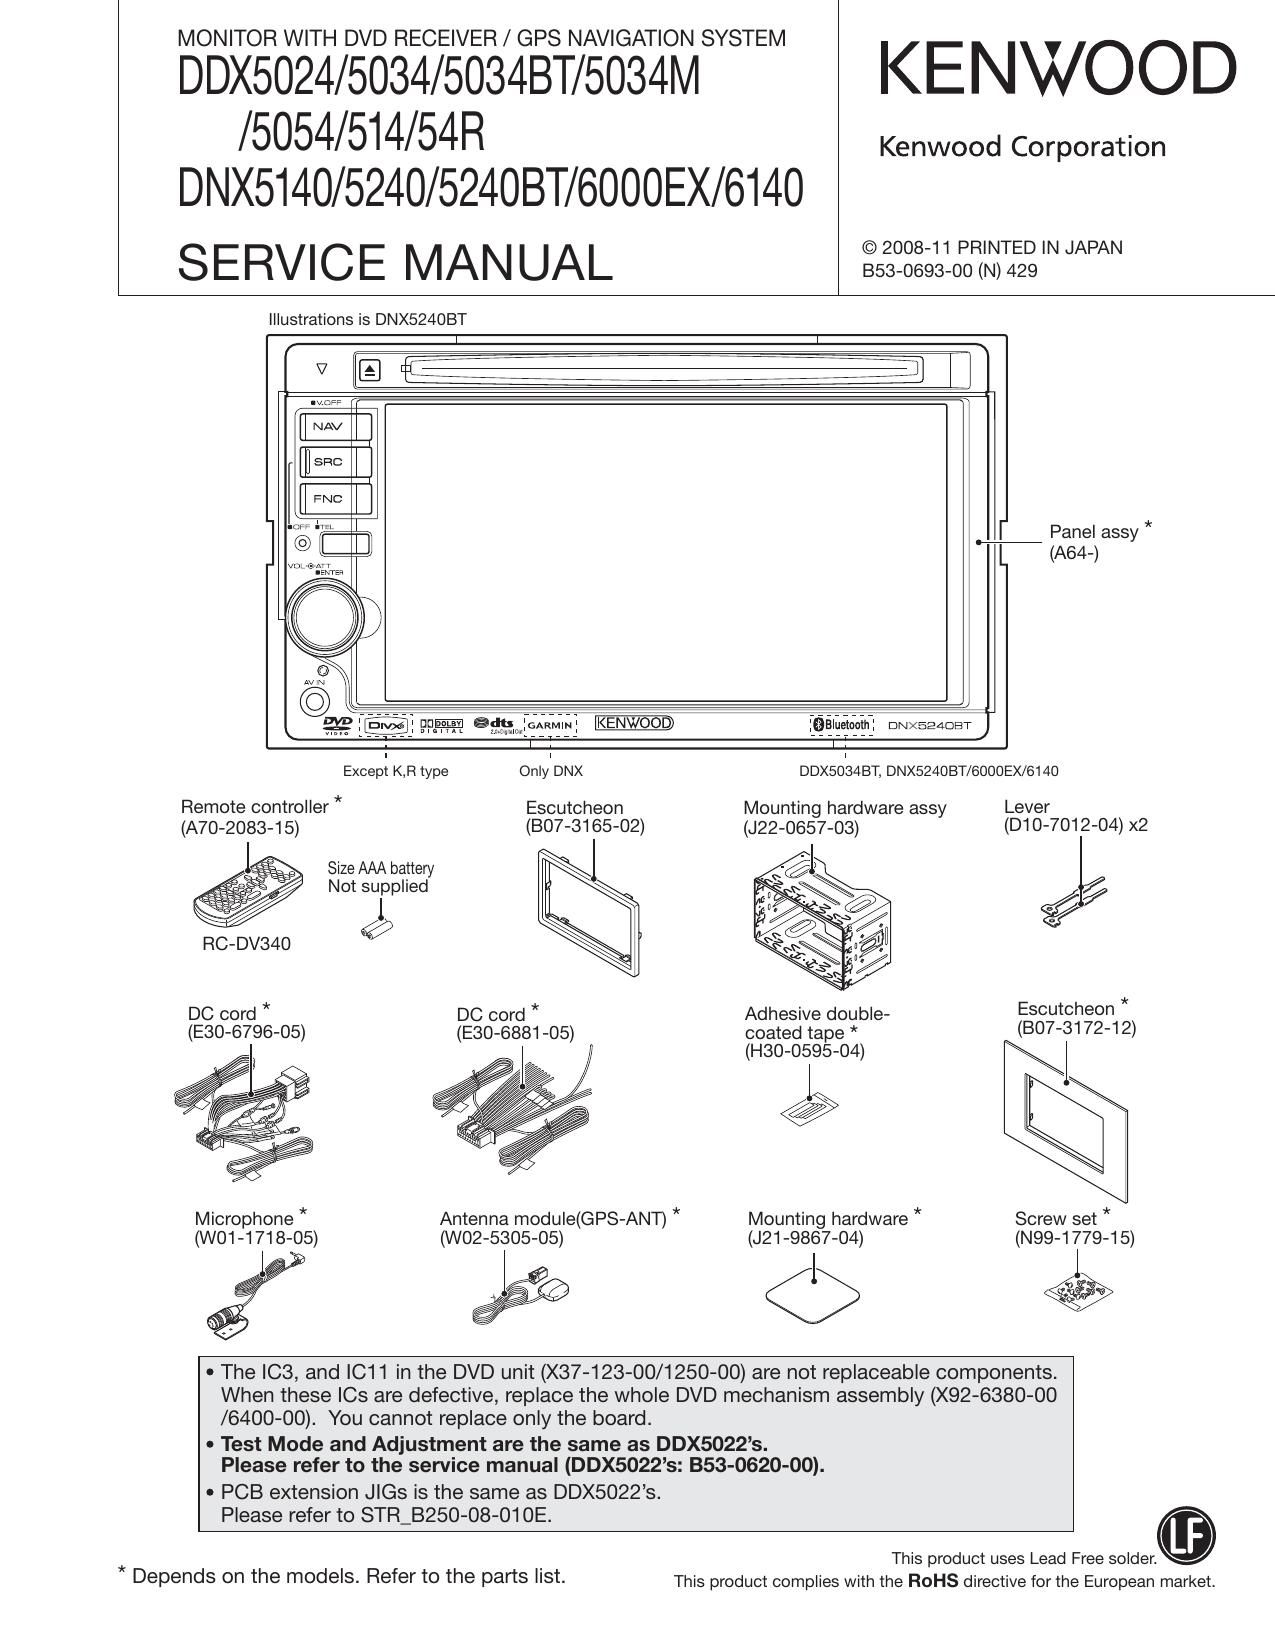 Kenwood DDX 50 R HU Service Manual